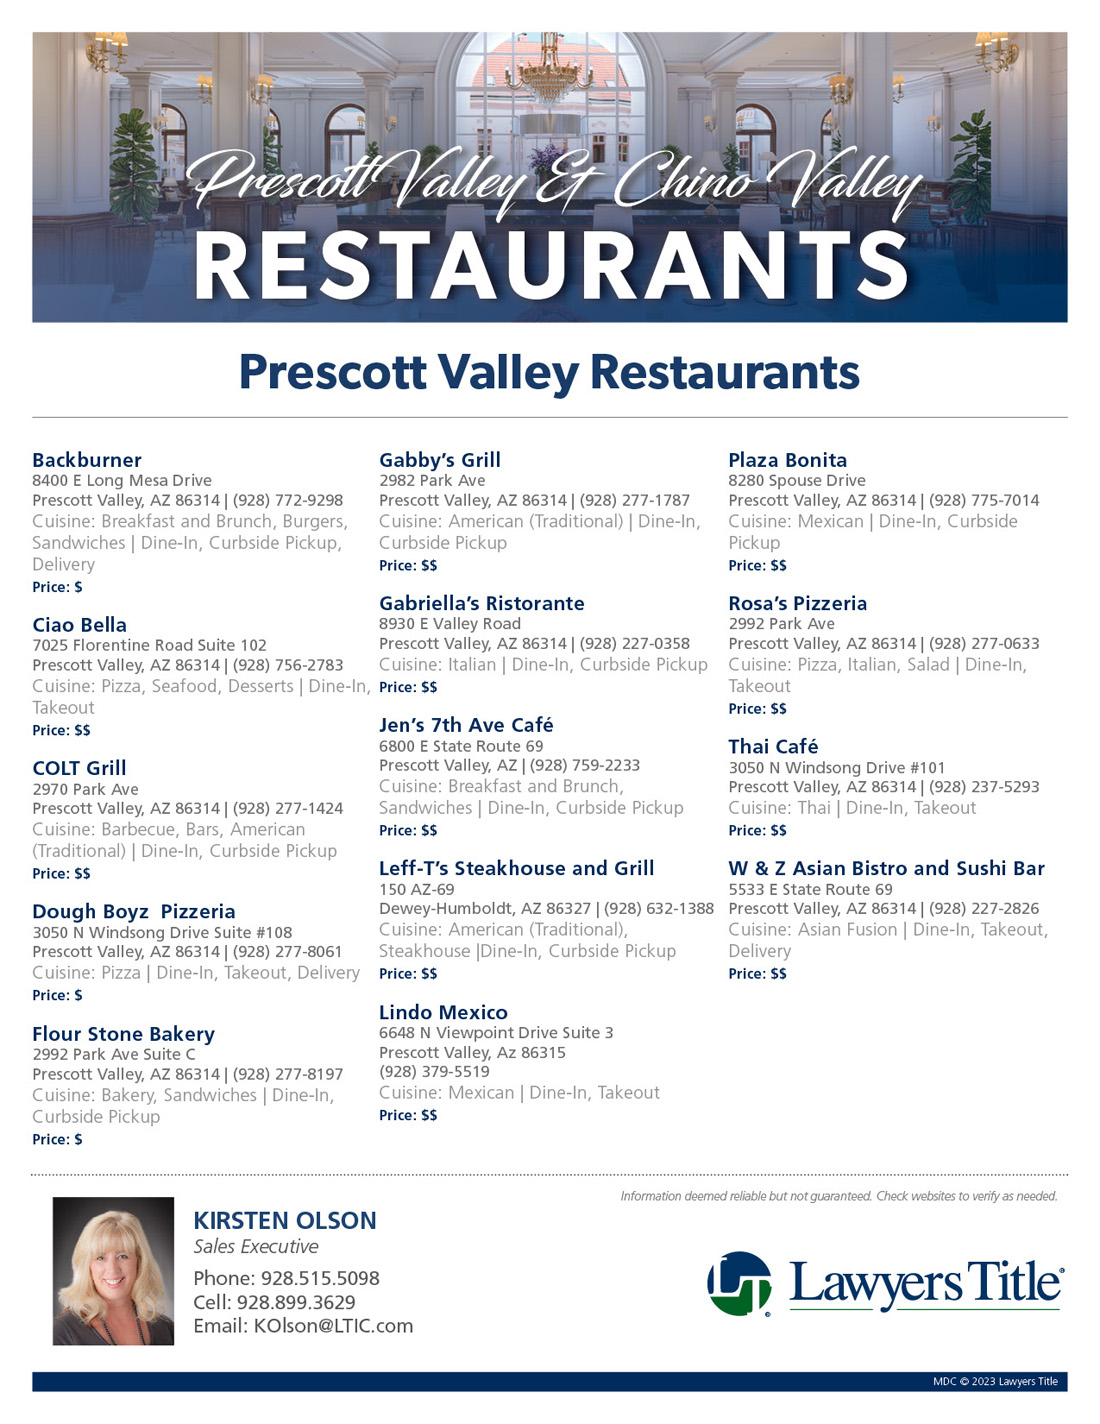 prescott-valley-chino-valley-restaurants